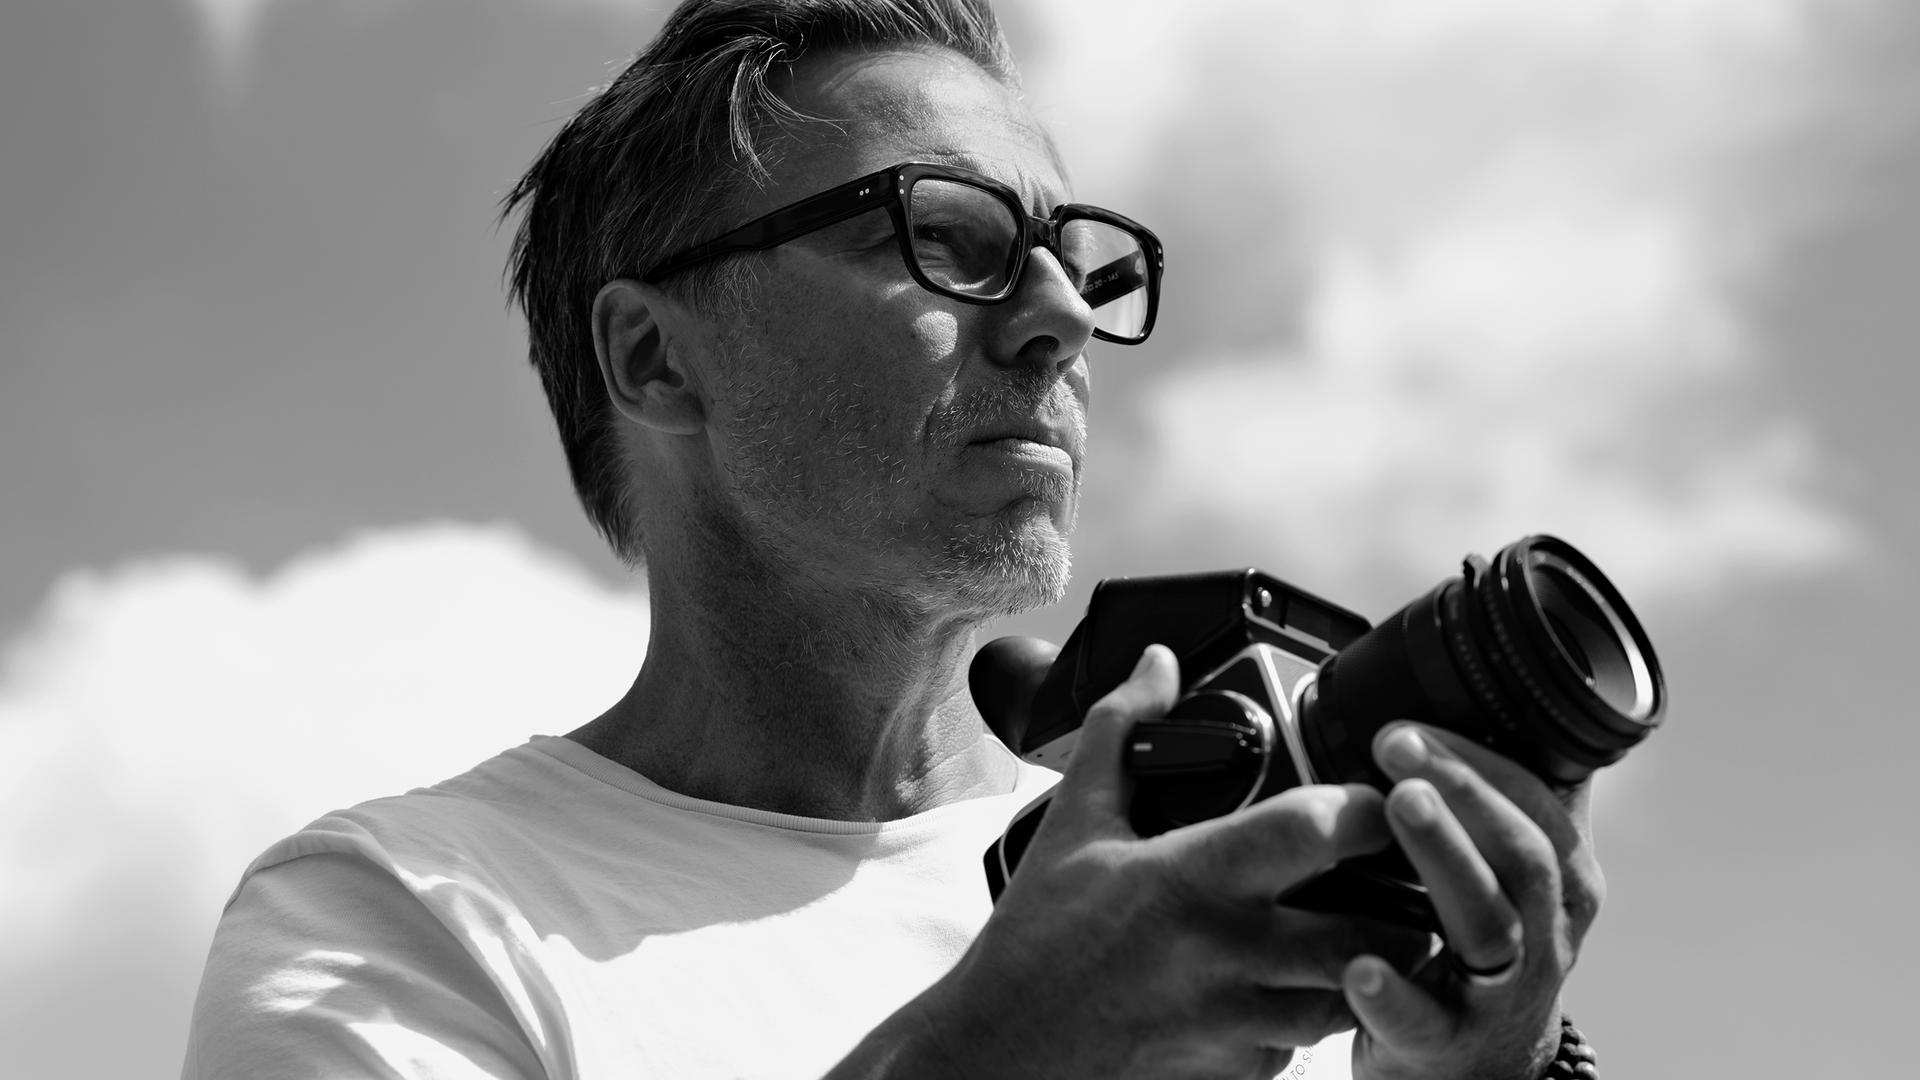 Fotograf Olaf Heine „Mich interessiert der Mensch hinter dem Porträt“